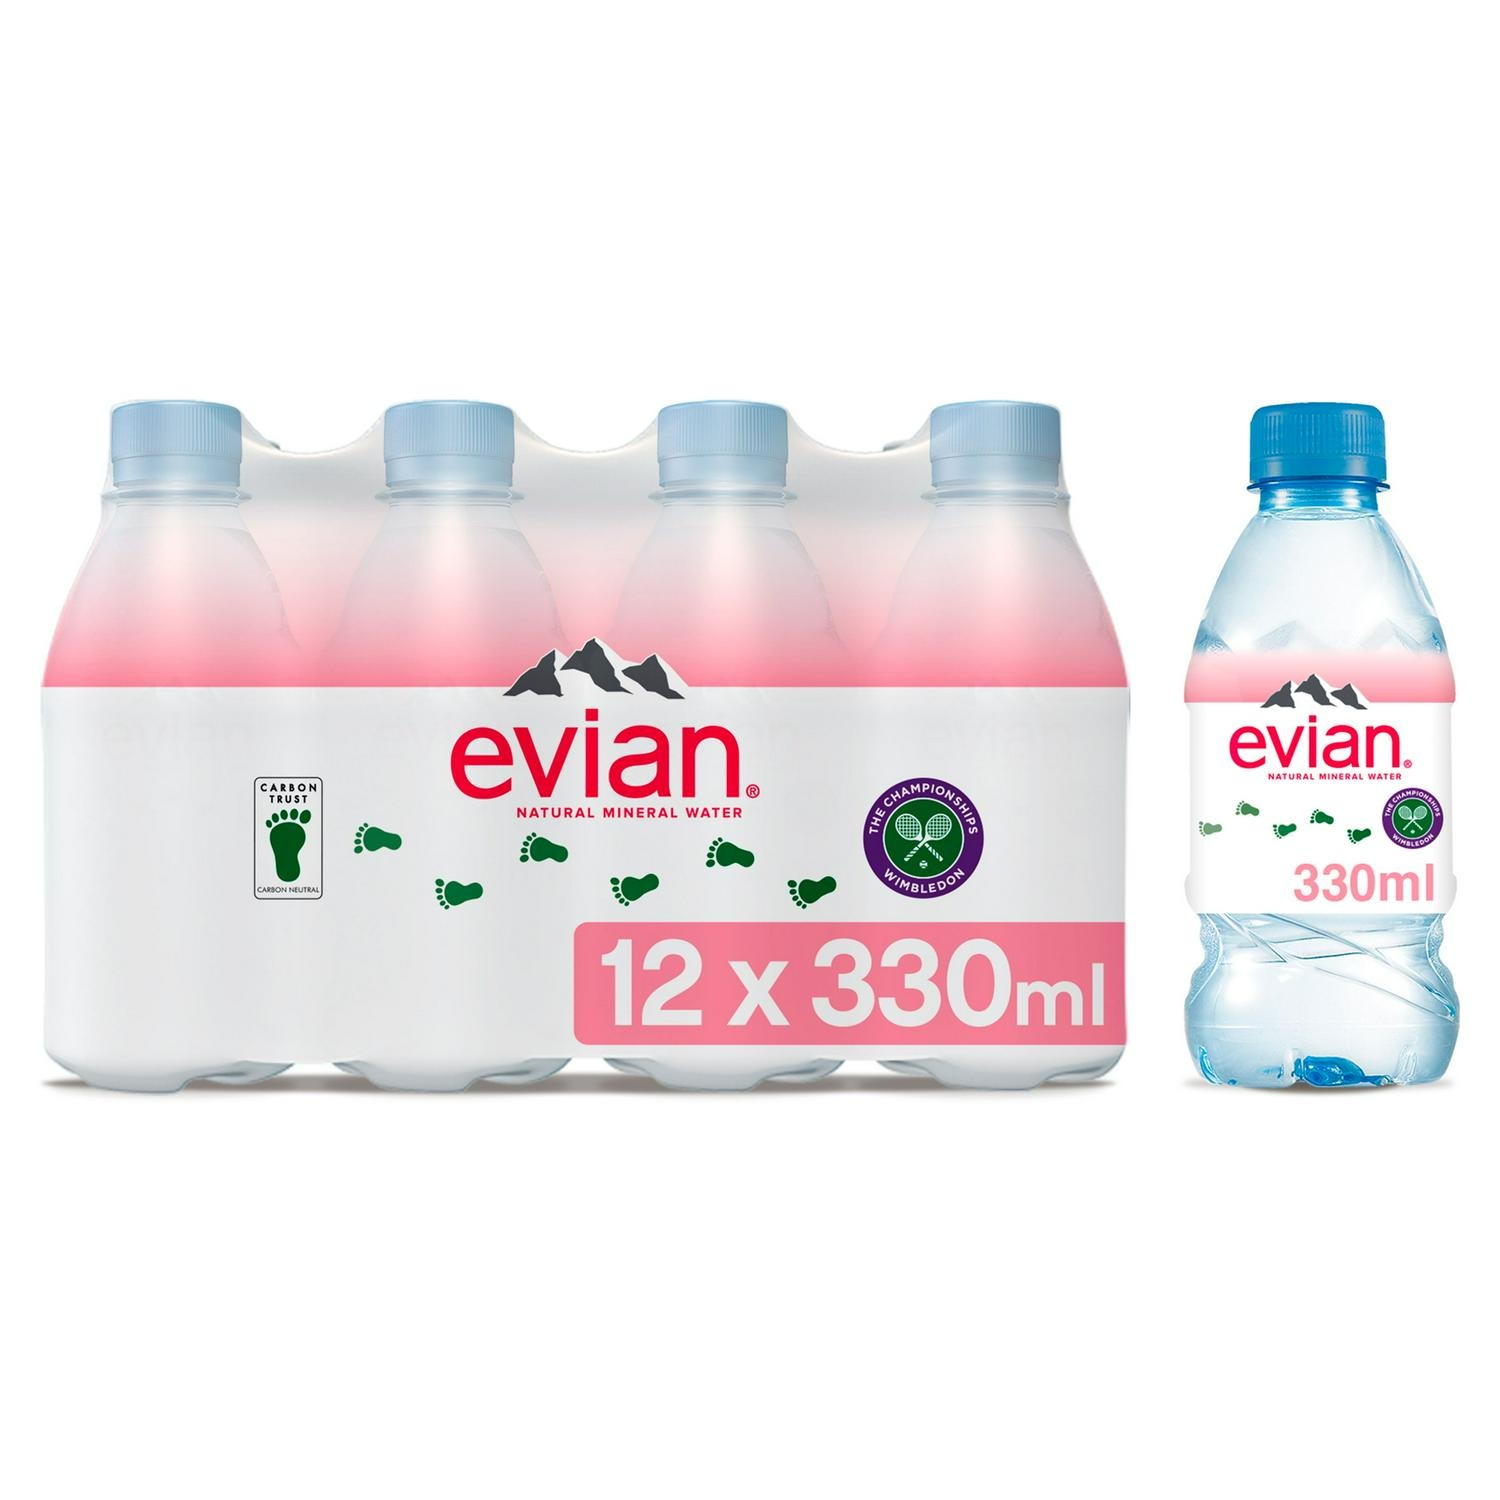 Evian Natural Mineral Water 12x330ml